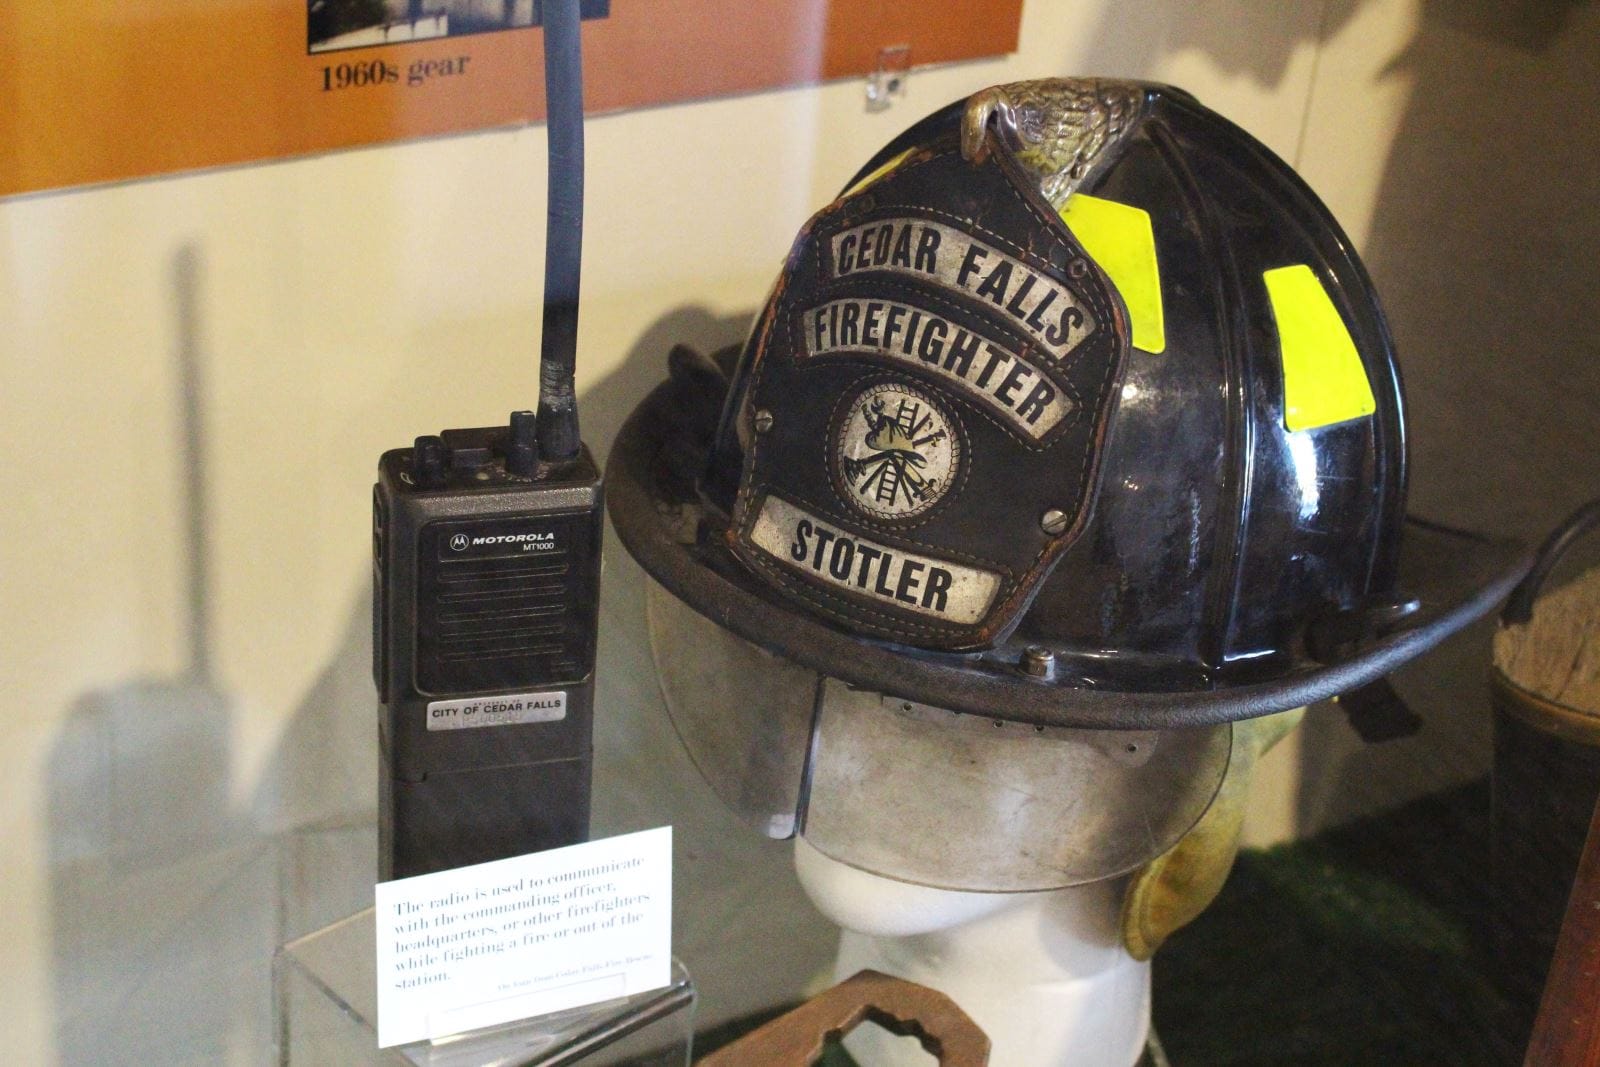 Cedar Falls Fire Rescue: 150 Years, the 2017 exhibit at the Cedar Falls Historical Society